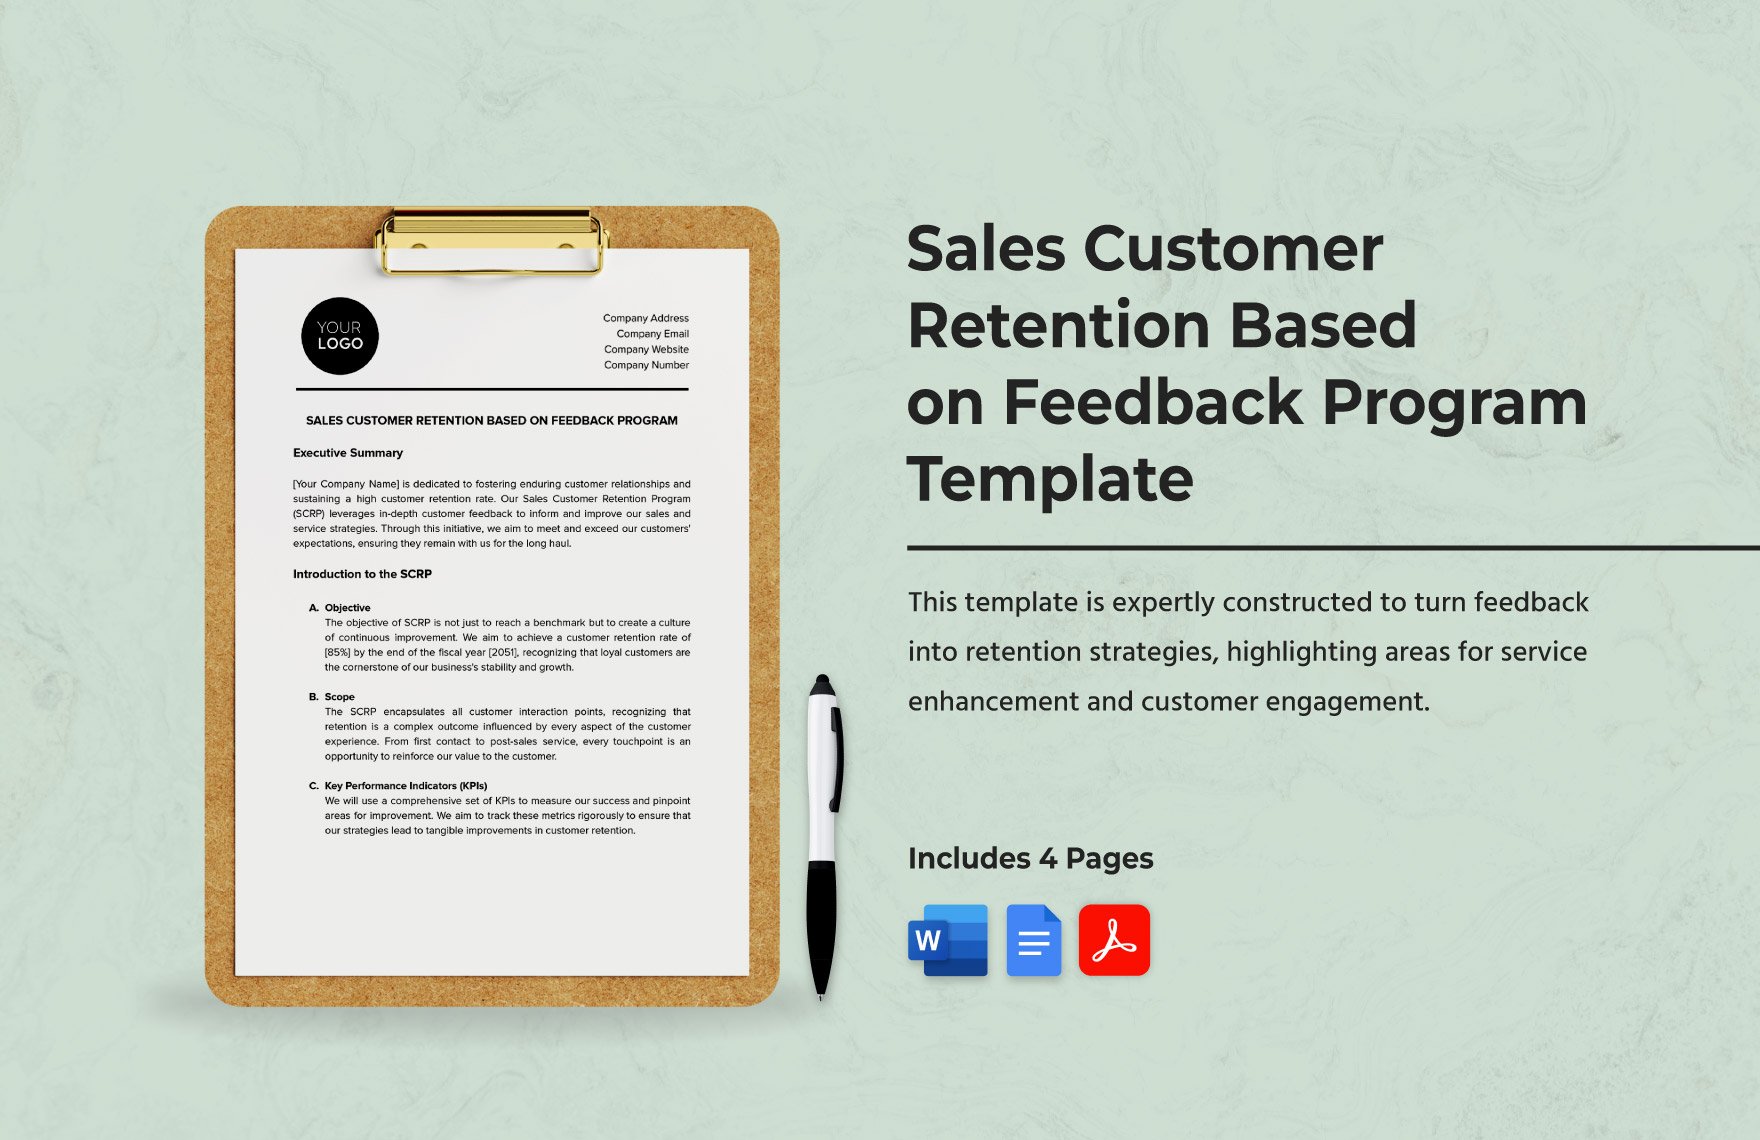 Sales Customer Retention Based on Feedback Program Template